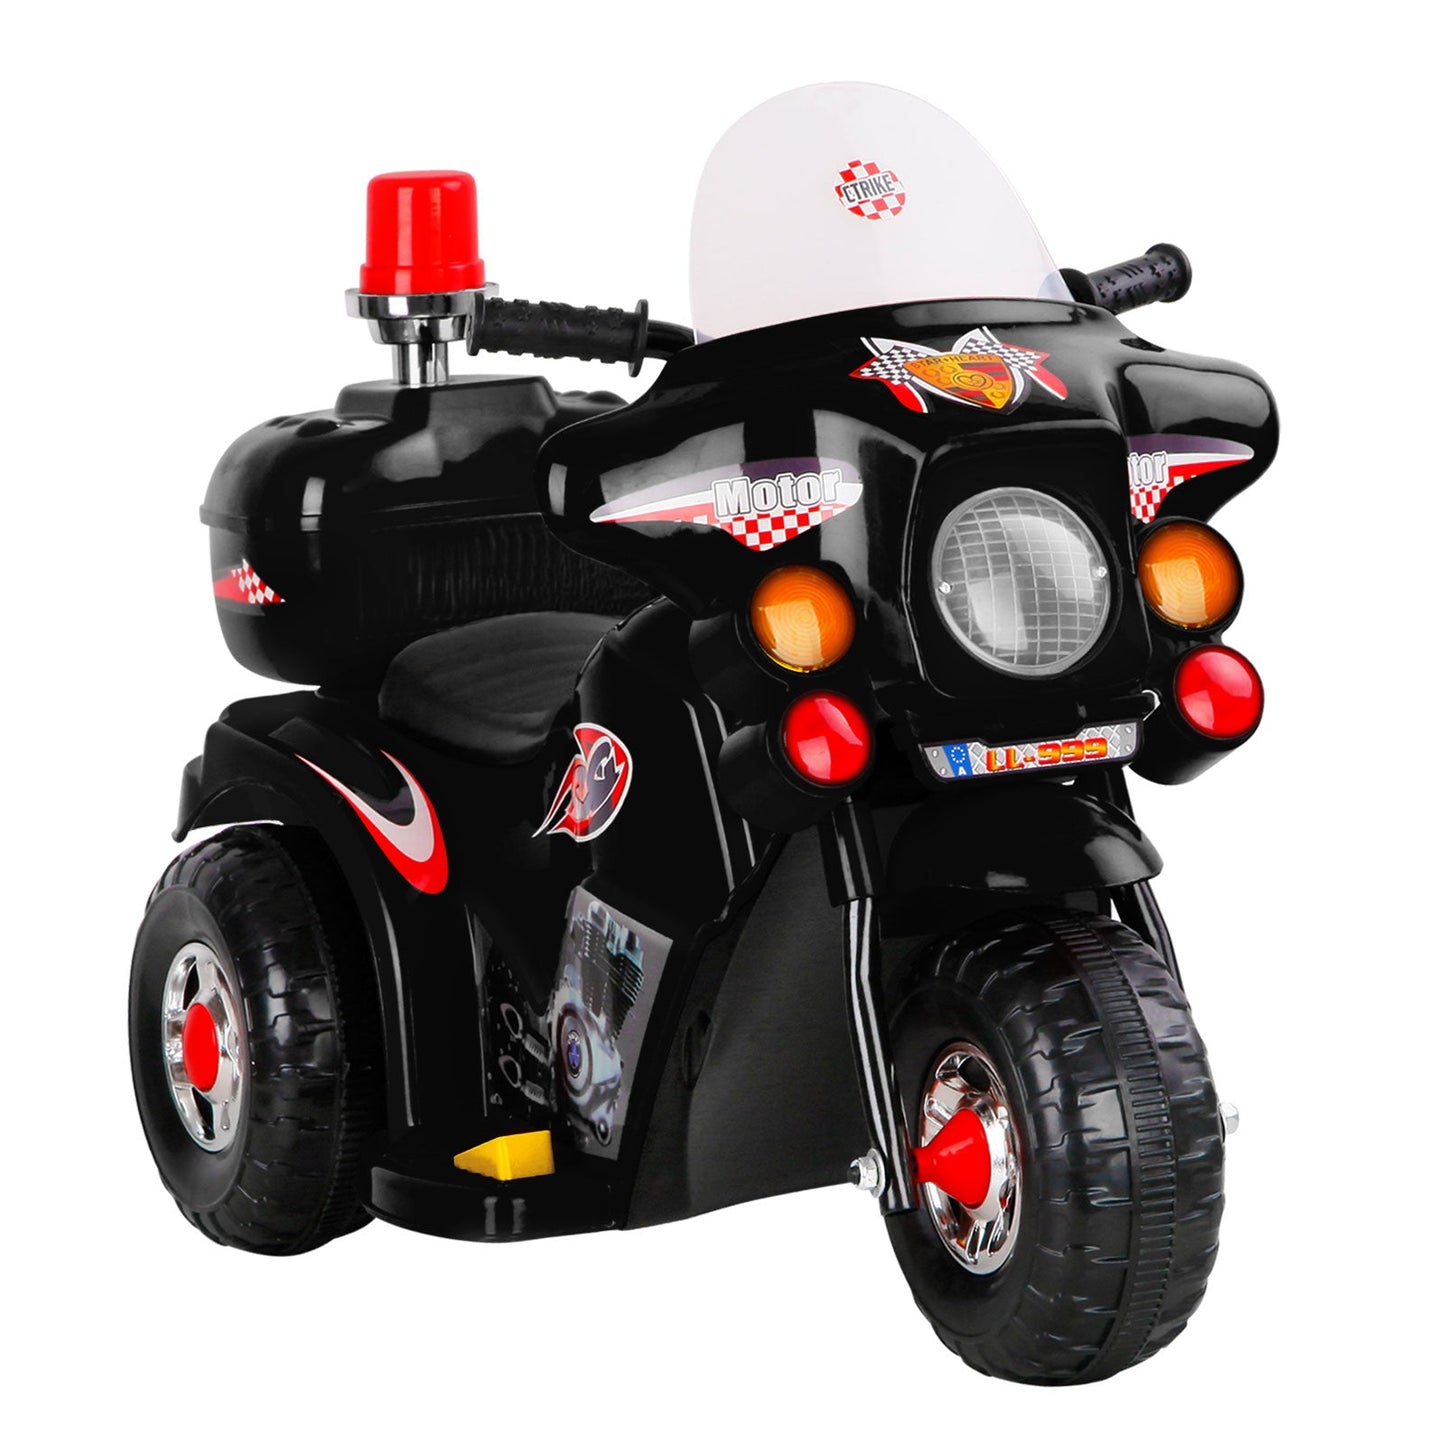 Rigo Kids Ride On Motorbike Motorcycle Car Black - Little Kids Business